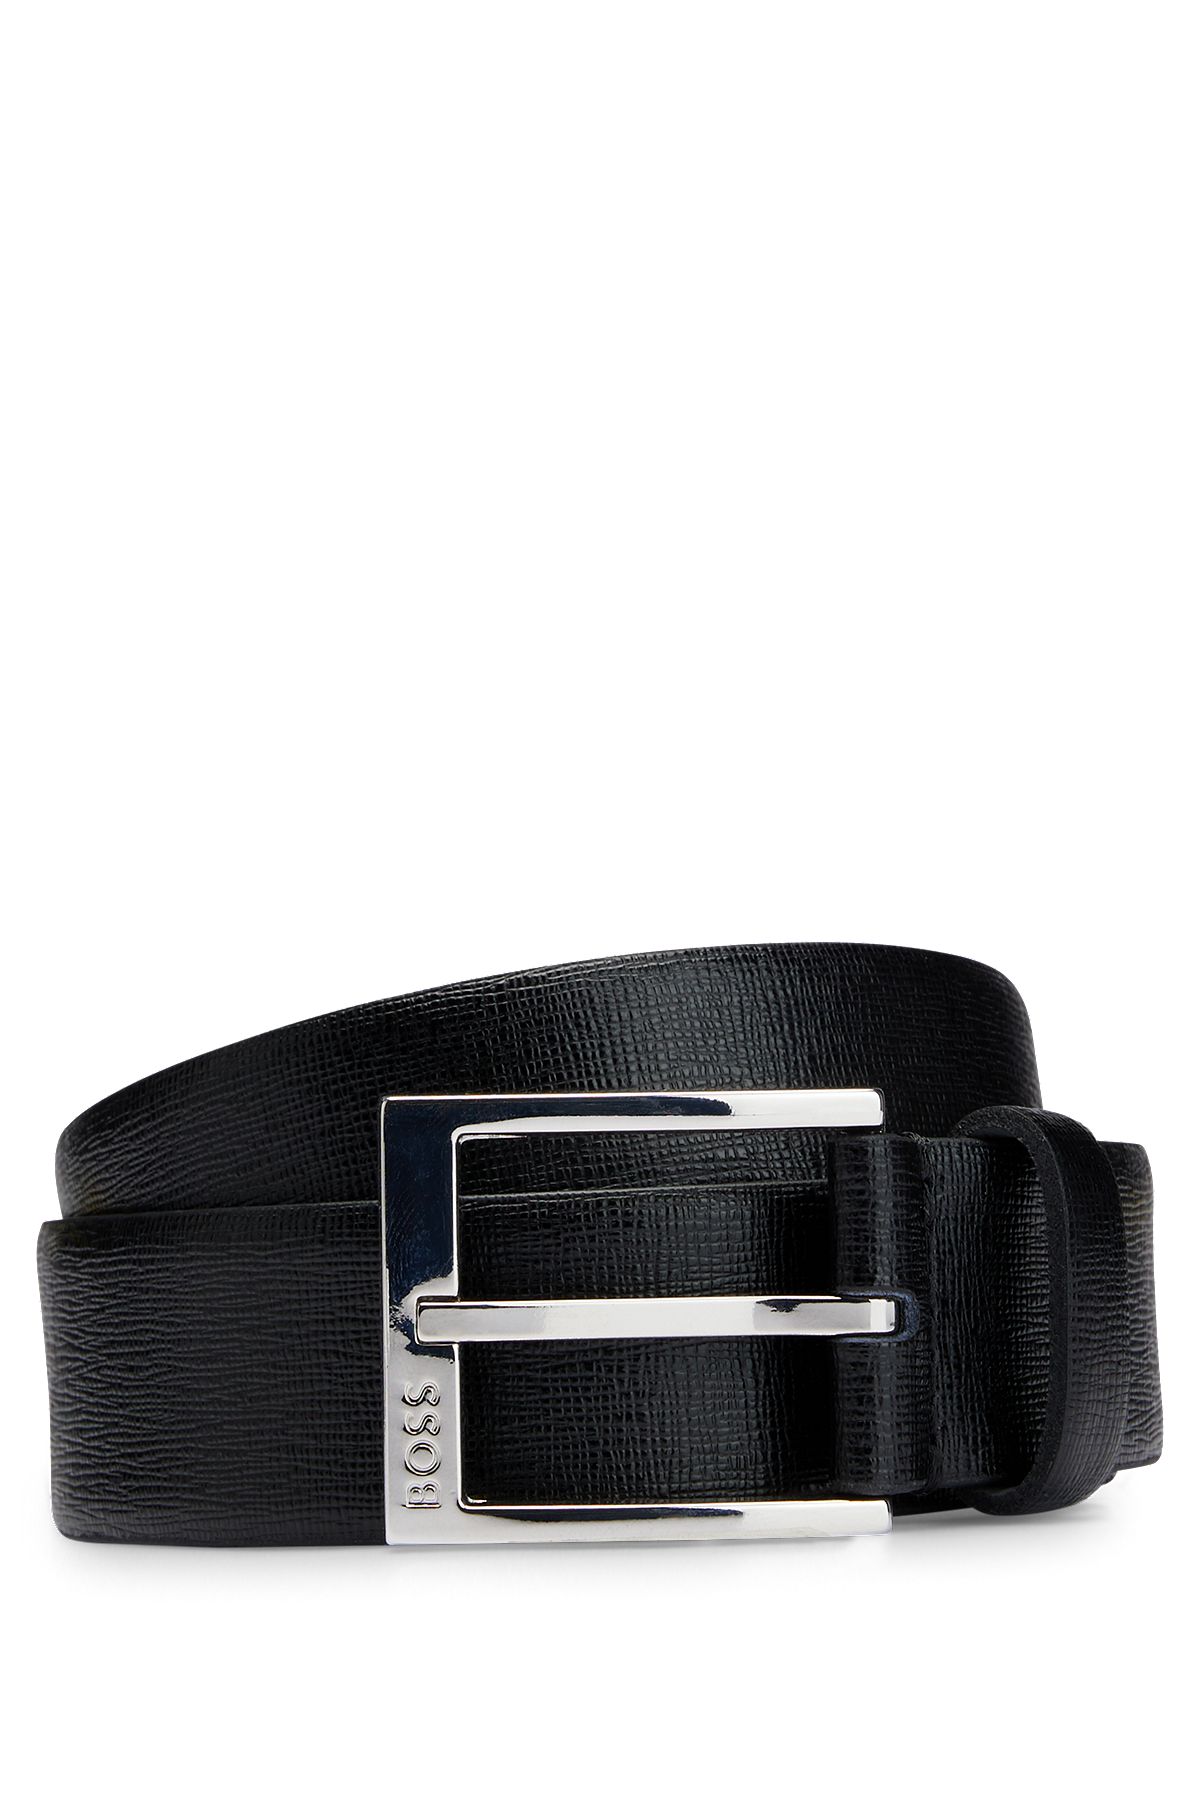 Belt in Italian leather with logo buckle, Black